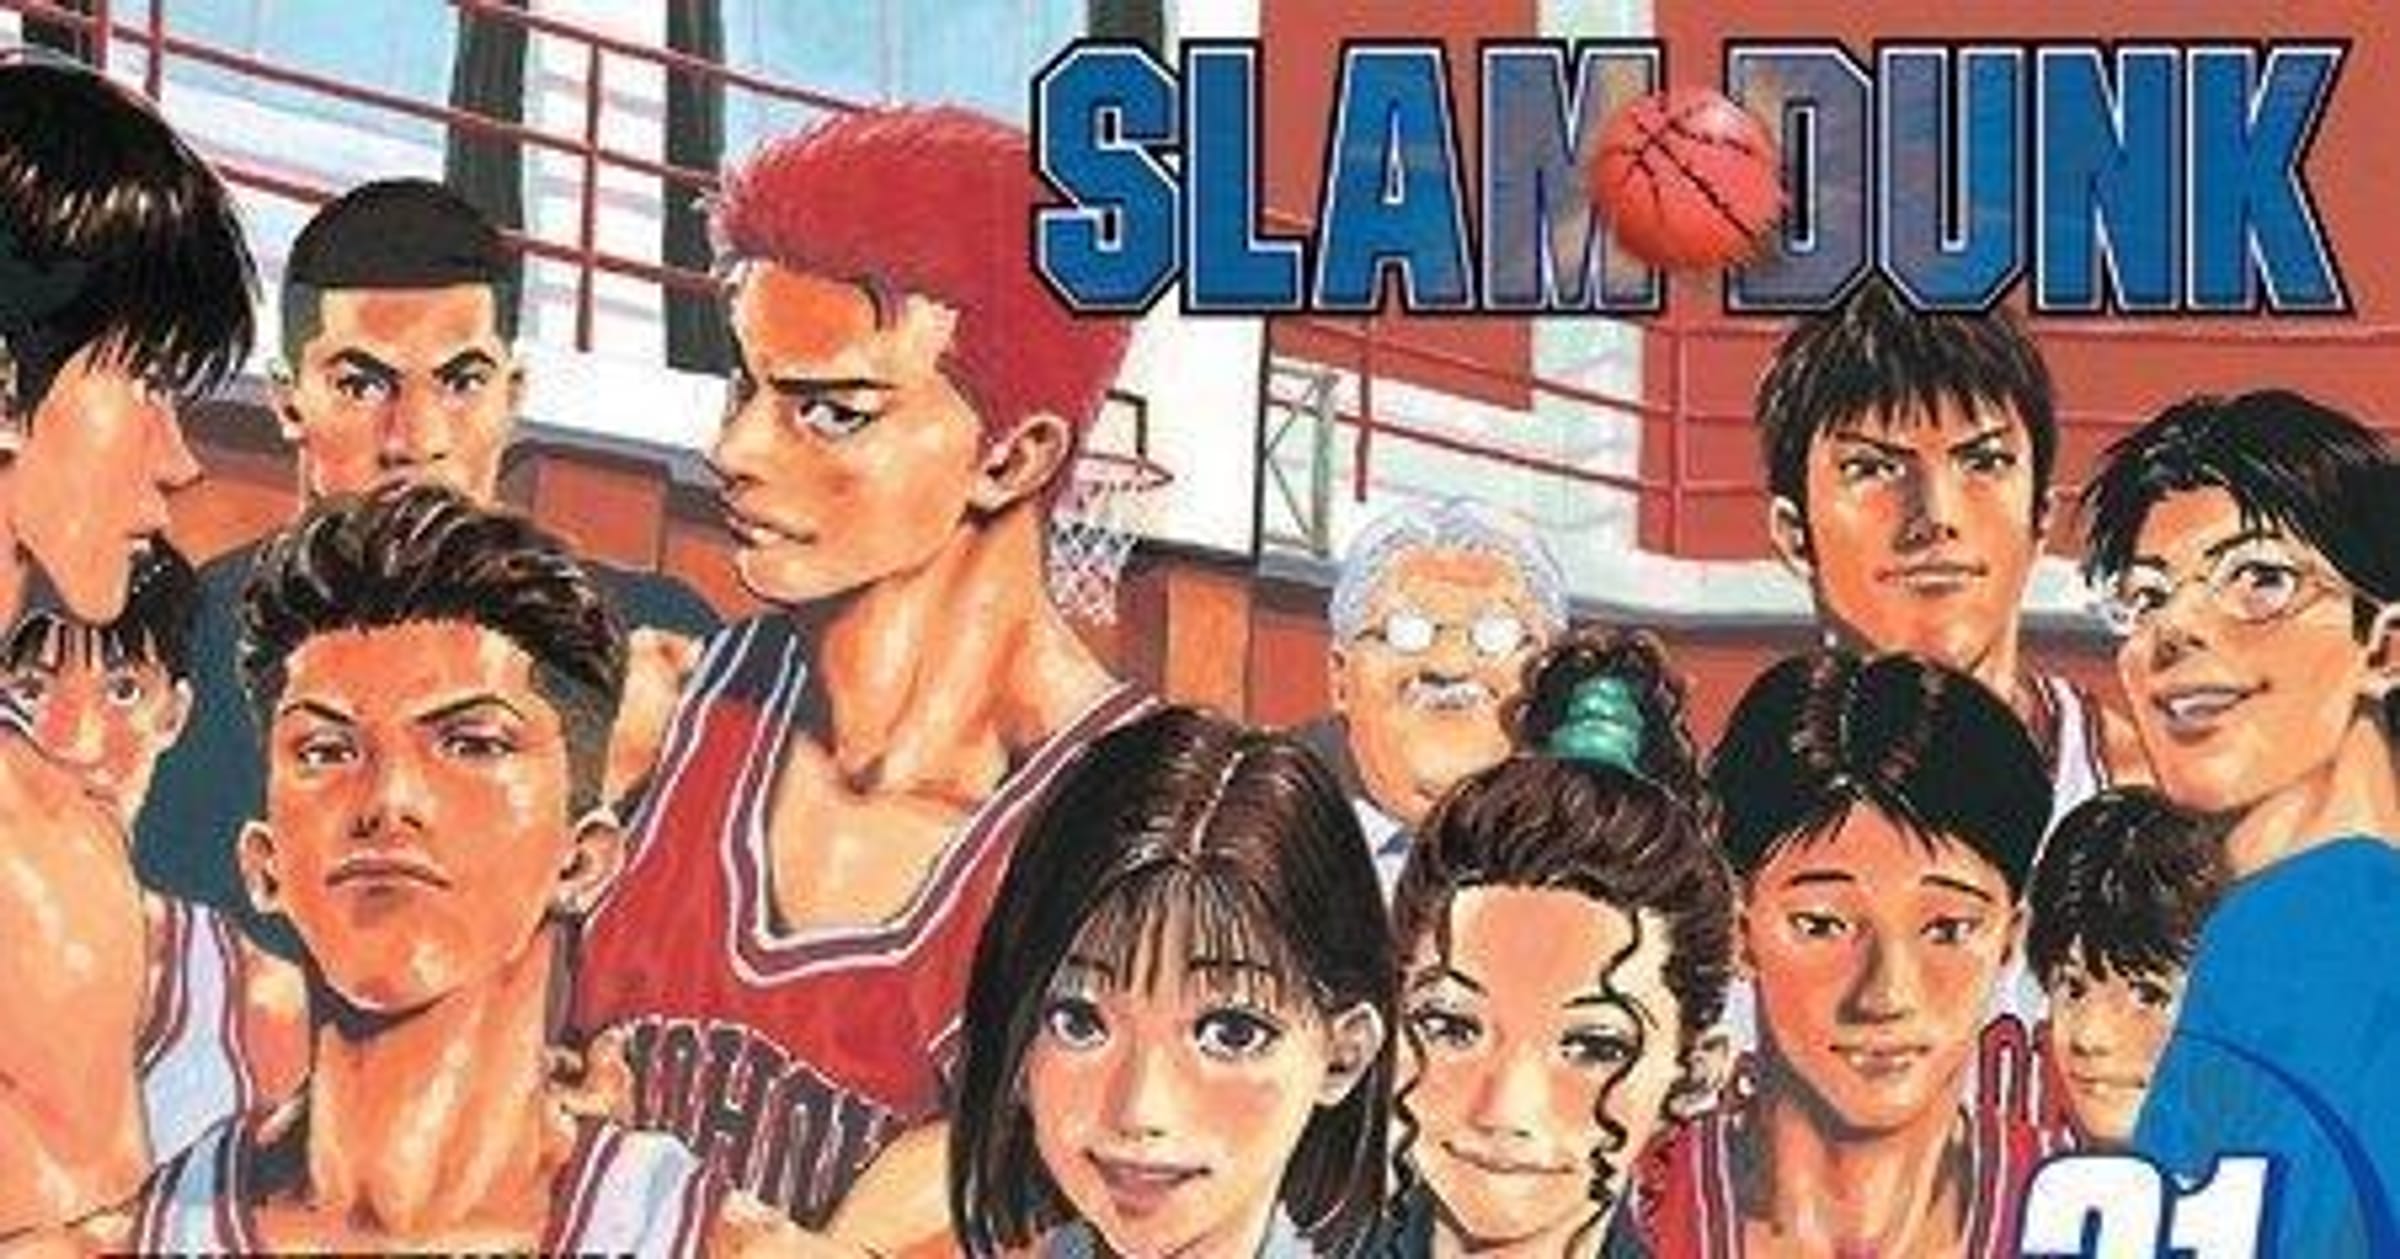 The Best Basketball Anime & Manga, Ranked